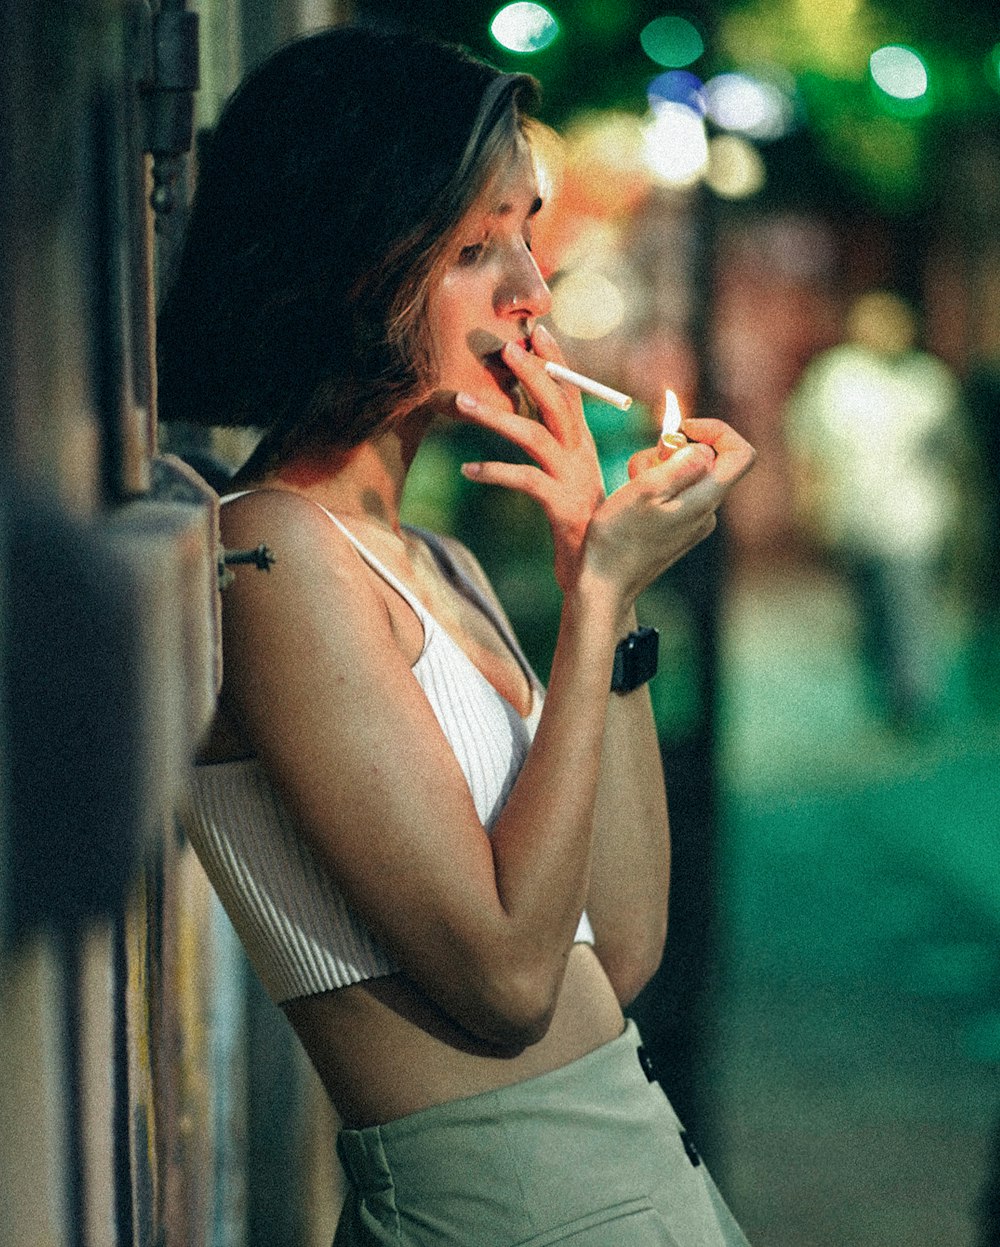 a woman smoking a cigarette on a city street